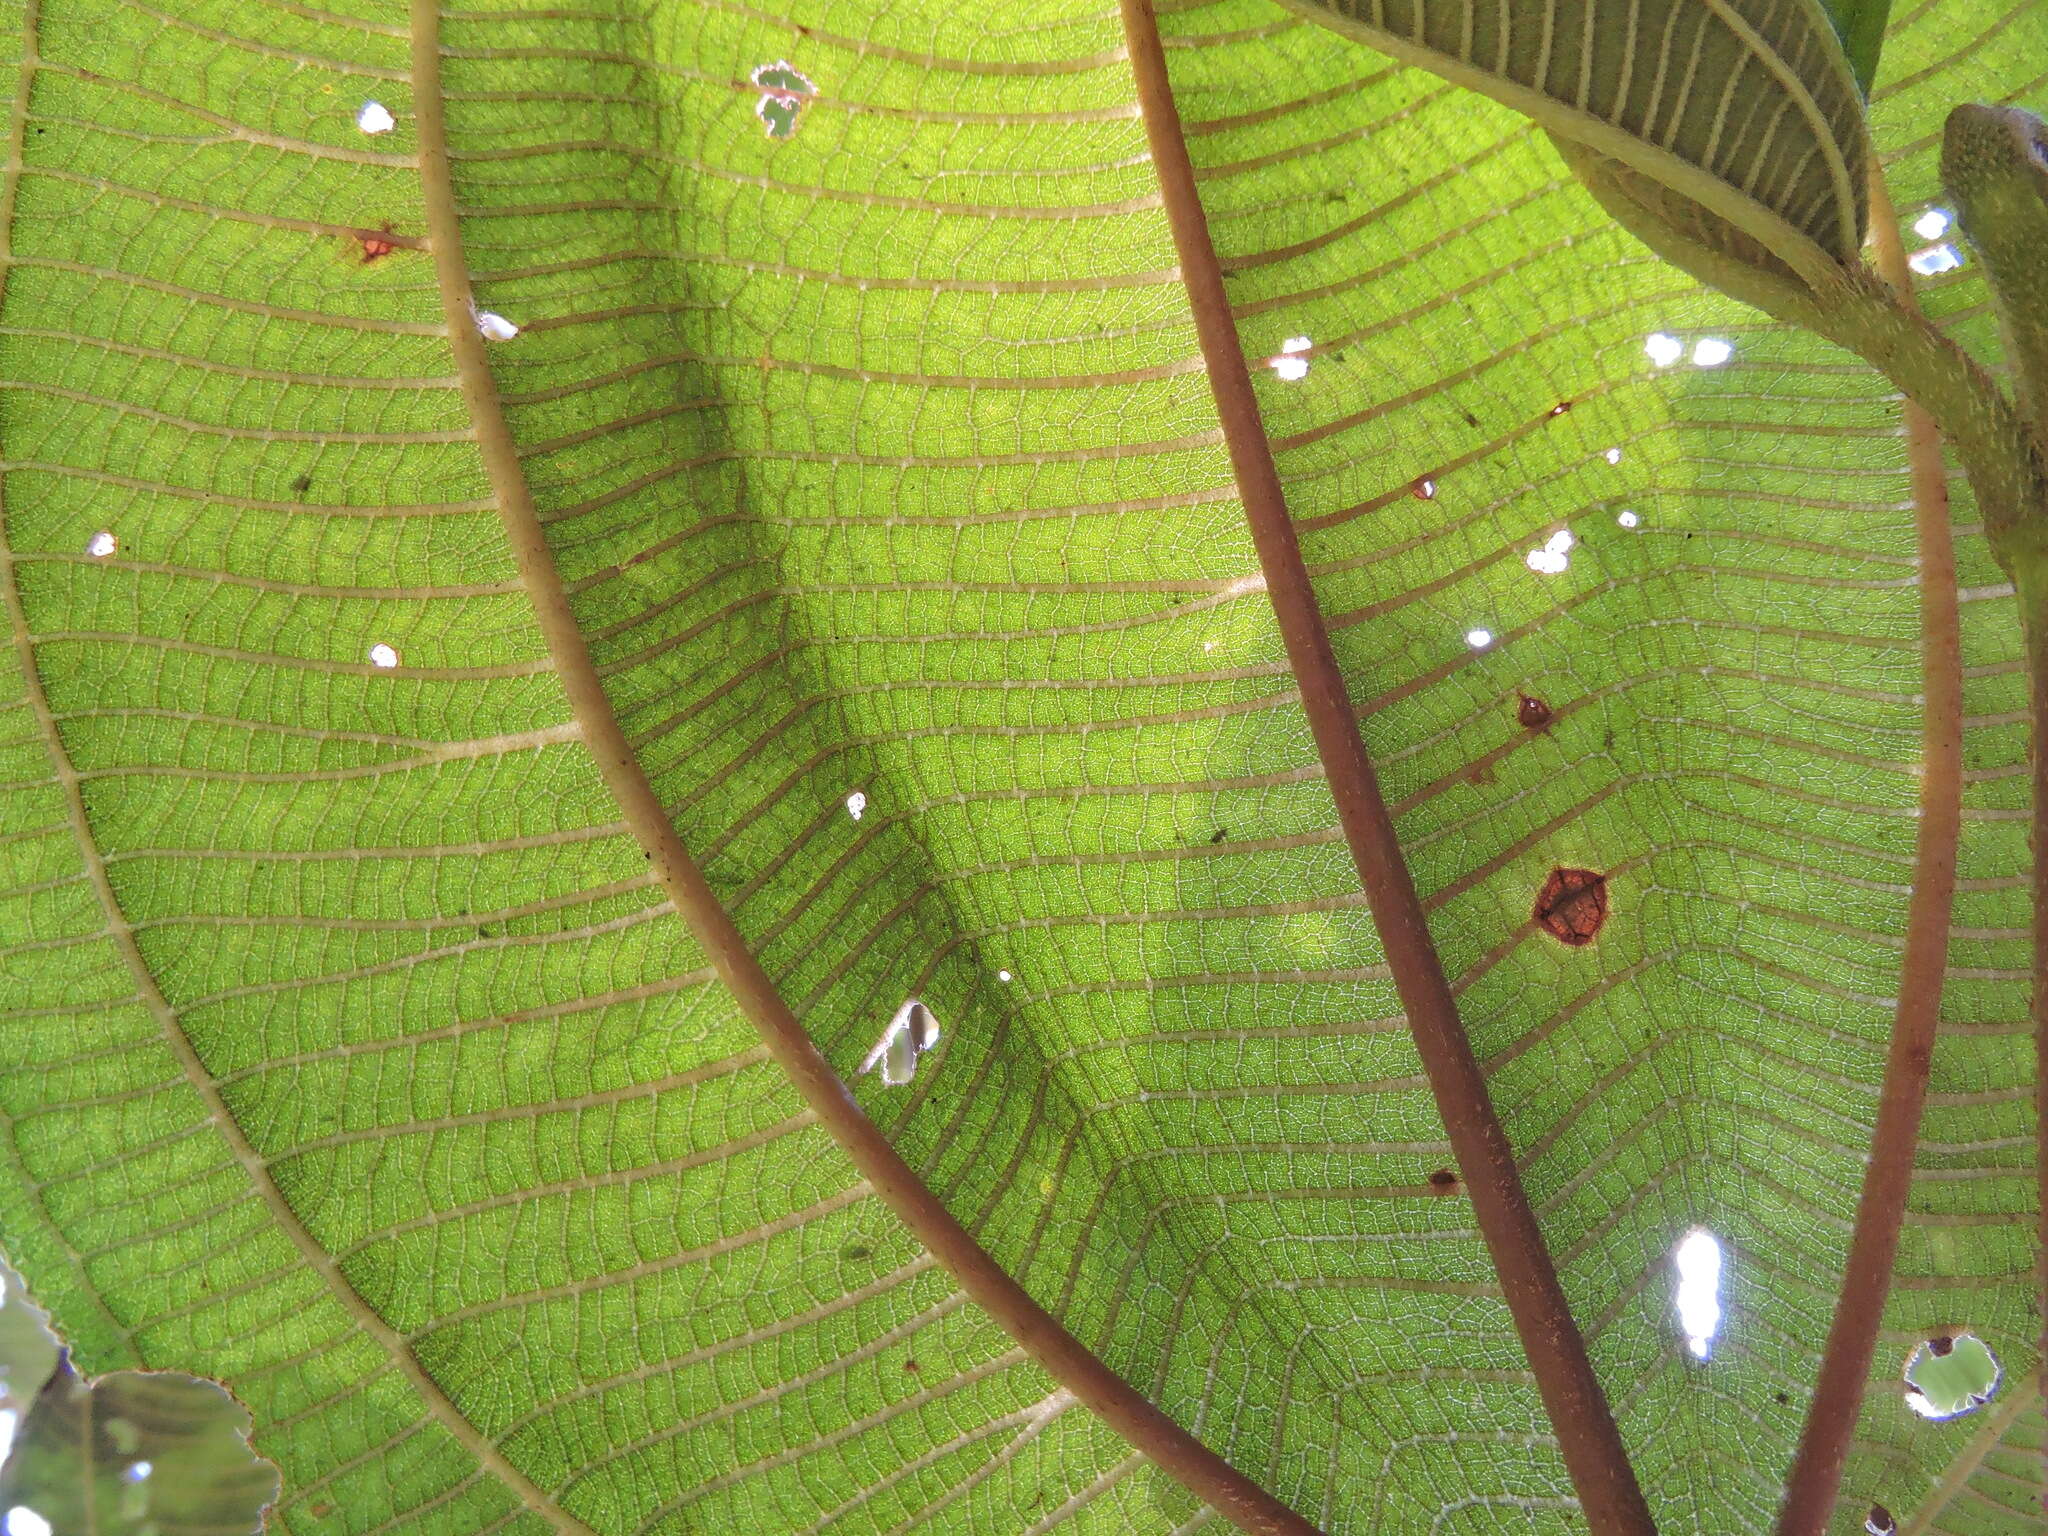 Image of Dichaetanthera cordifolia Baker